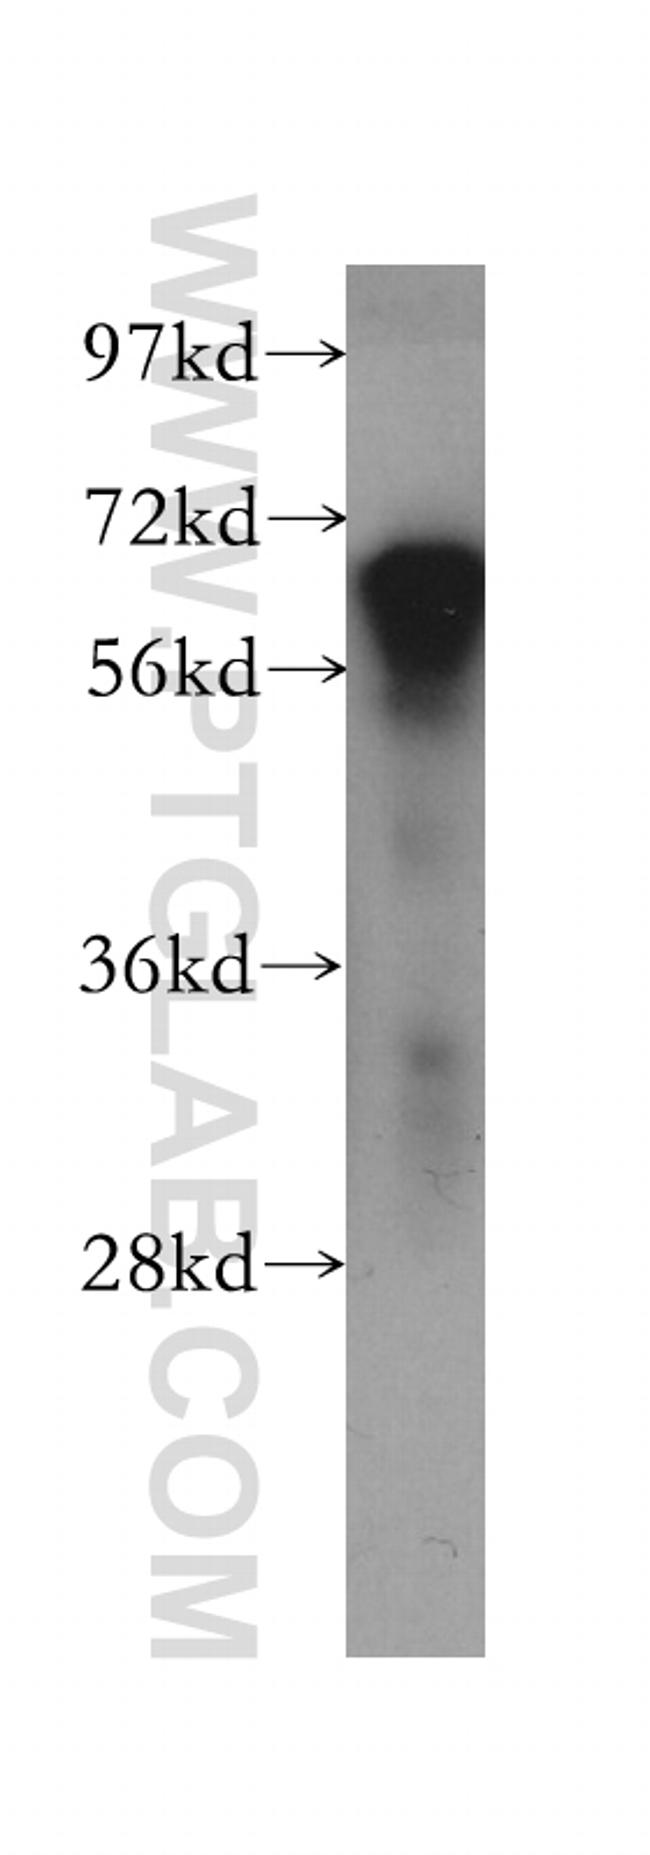 PDE12 Antibody in Western Blot (WB)